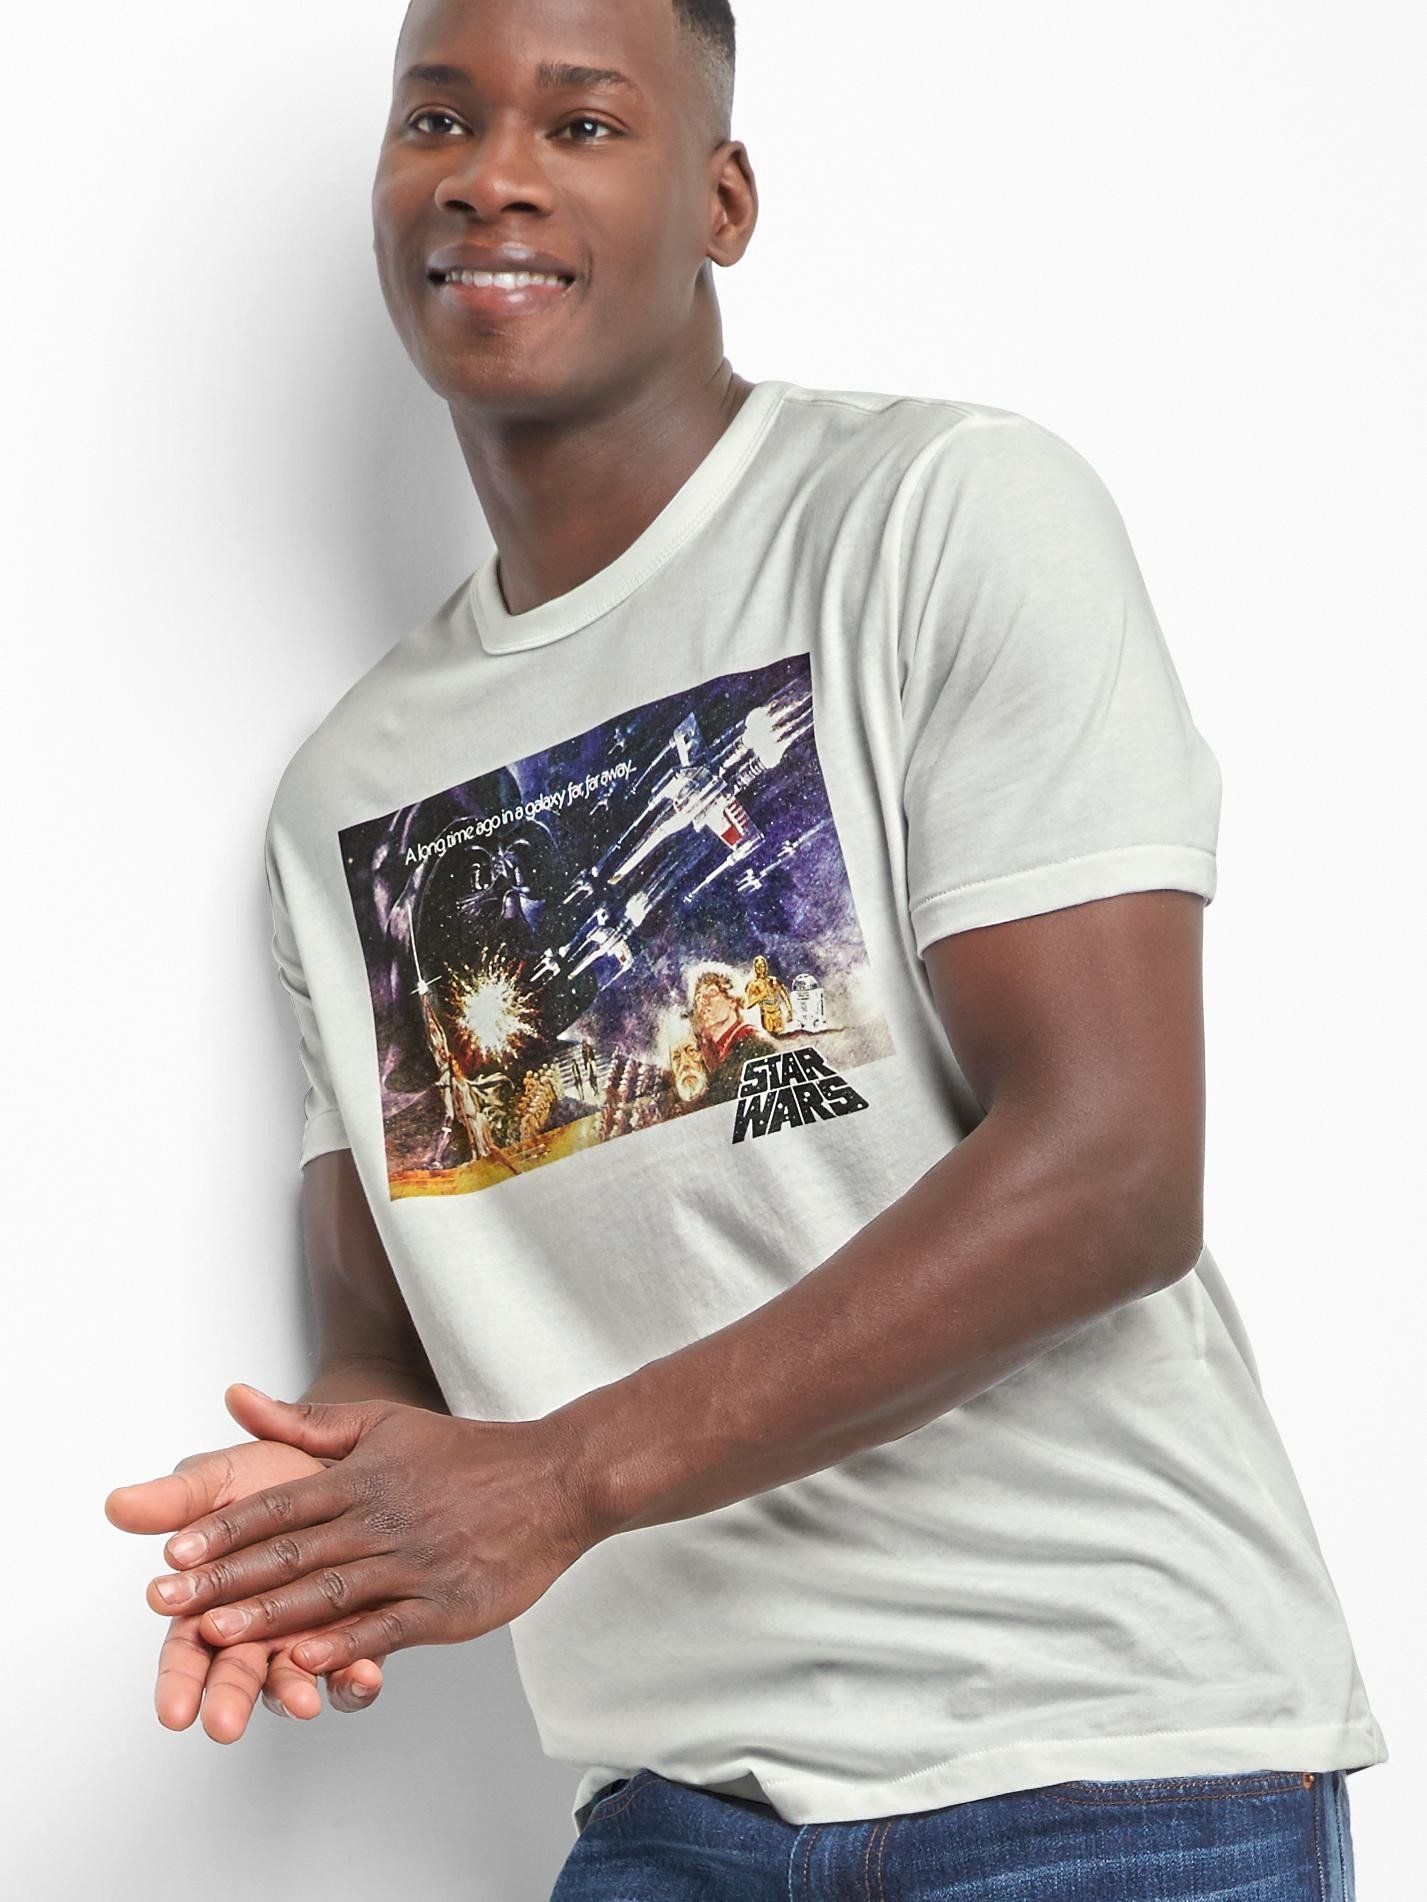 Gap | Star Wars™ galaxy far far away t-shirt product image